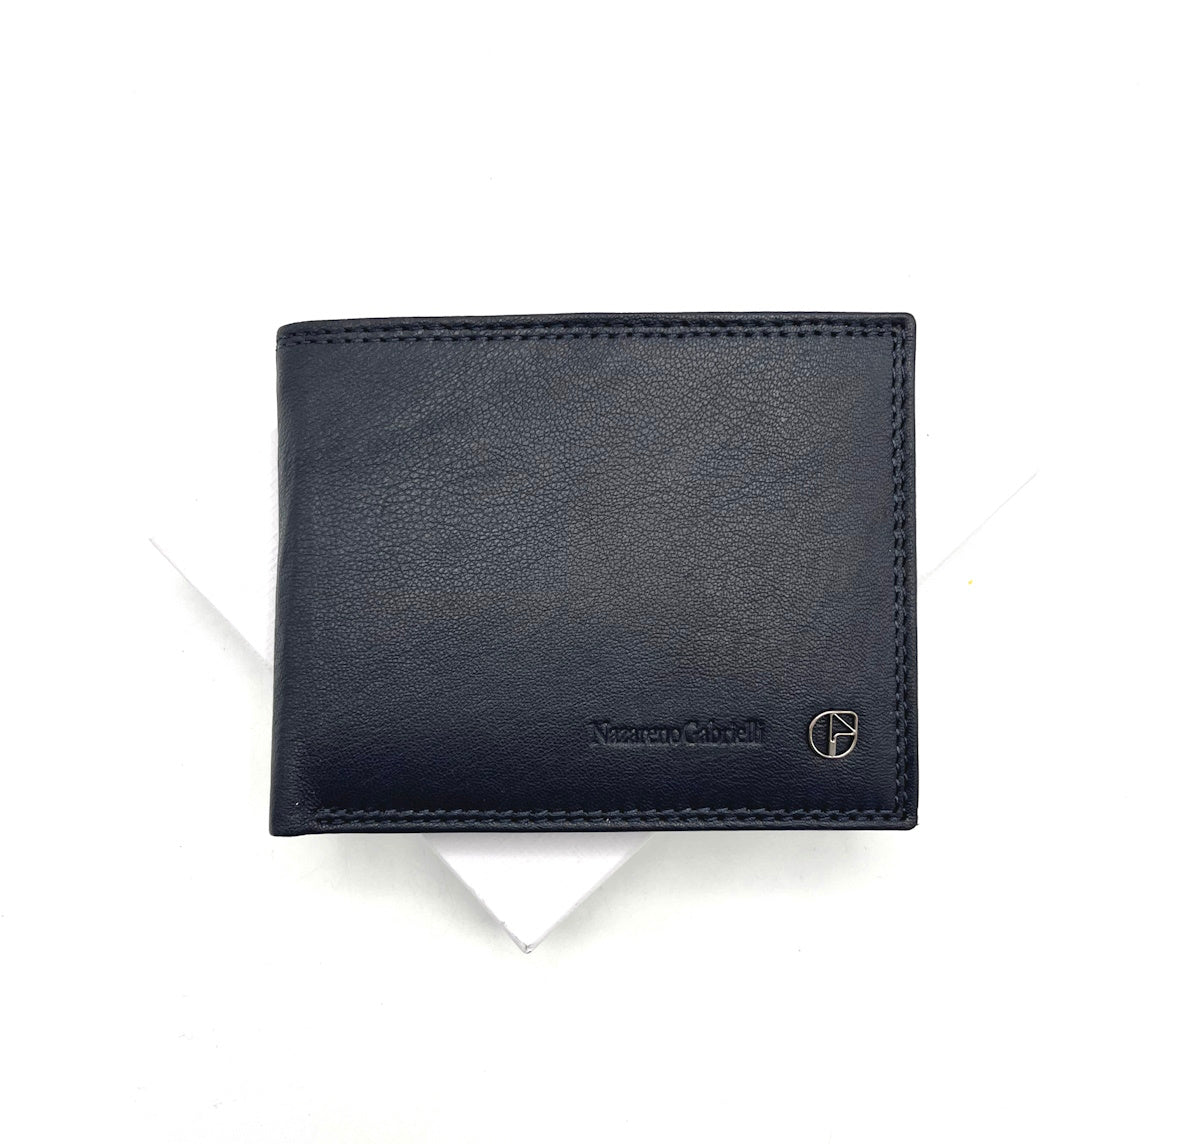 Genuine leather wallet, N.Gabrielli, art. PDK391-1